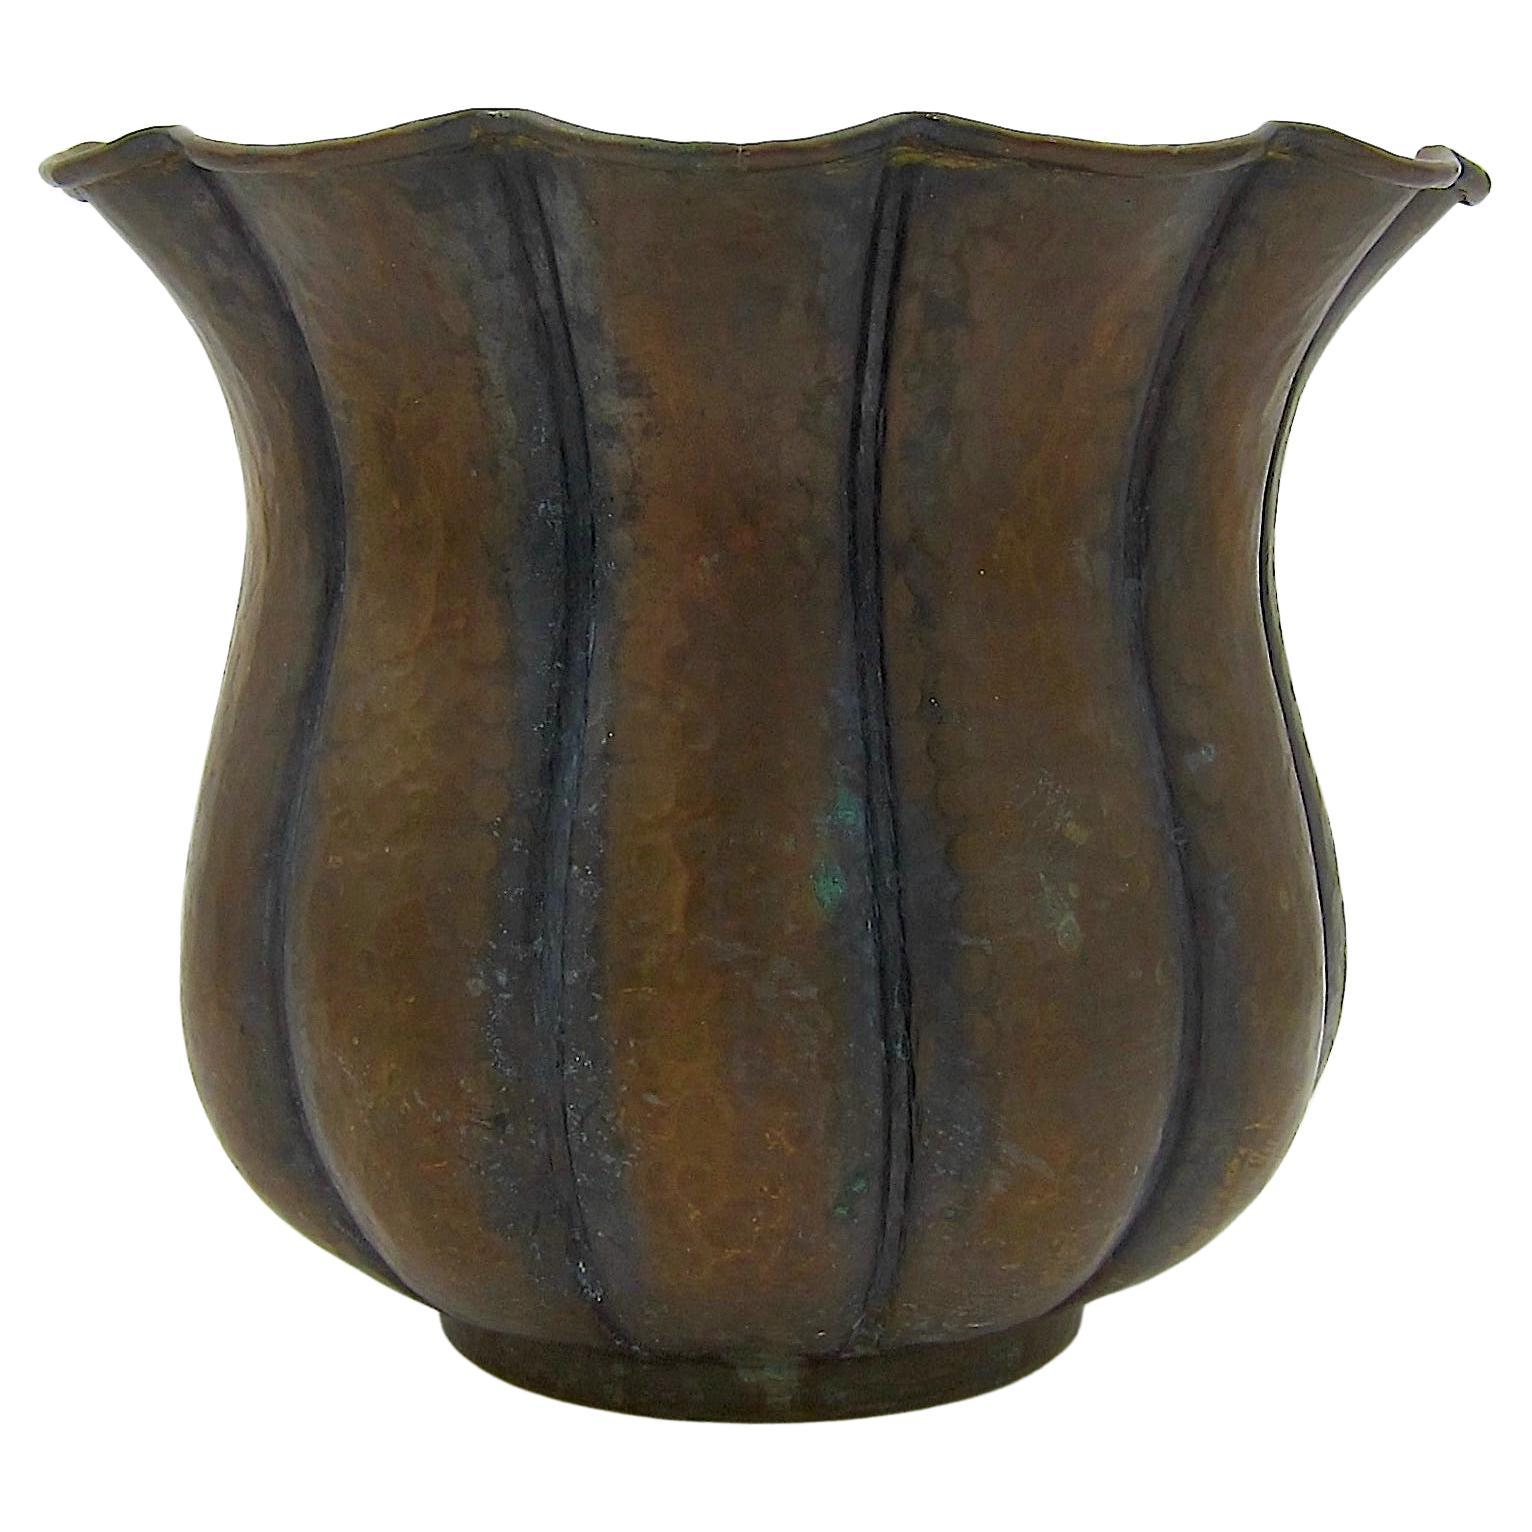 Antique Hammered Copper Cachepot or Planter